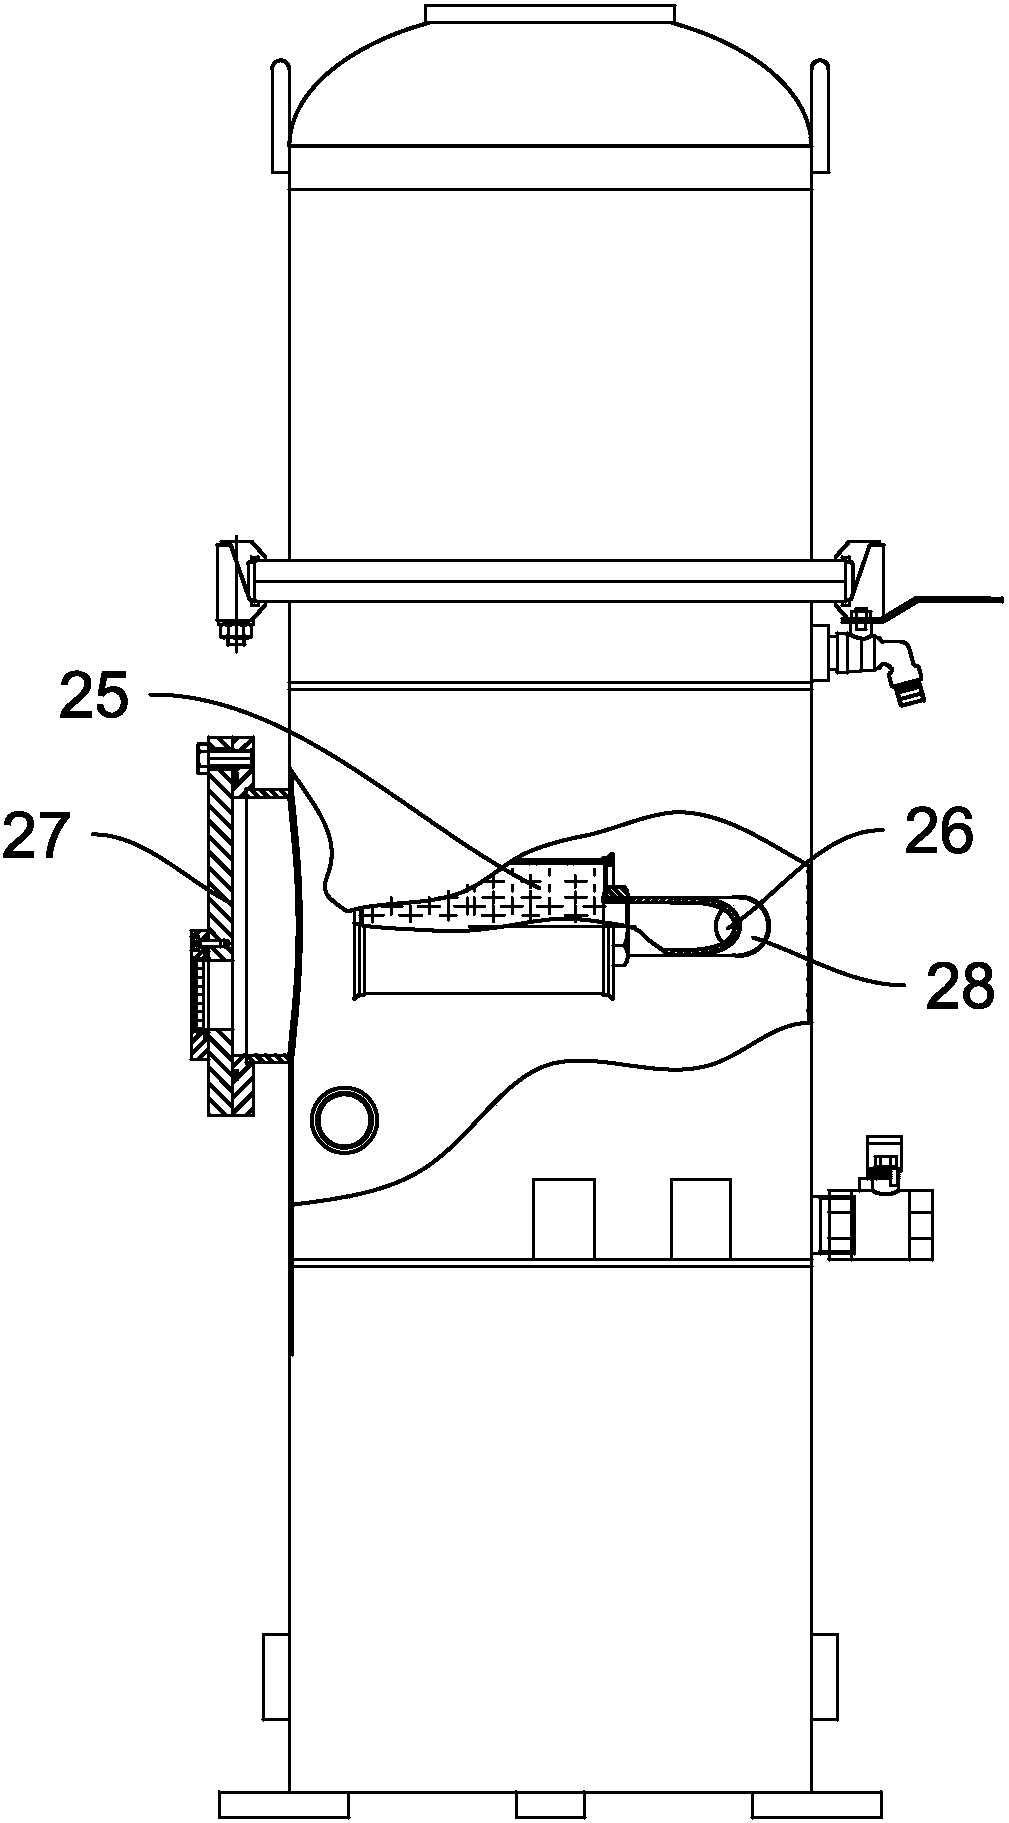 Sliding valve vacuum pump